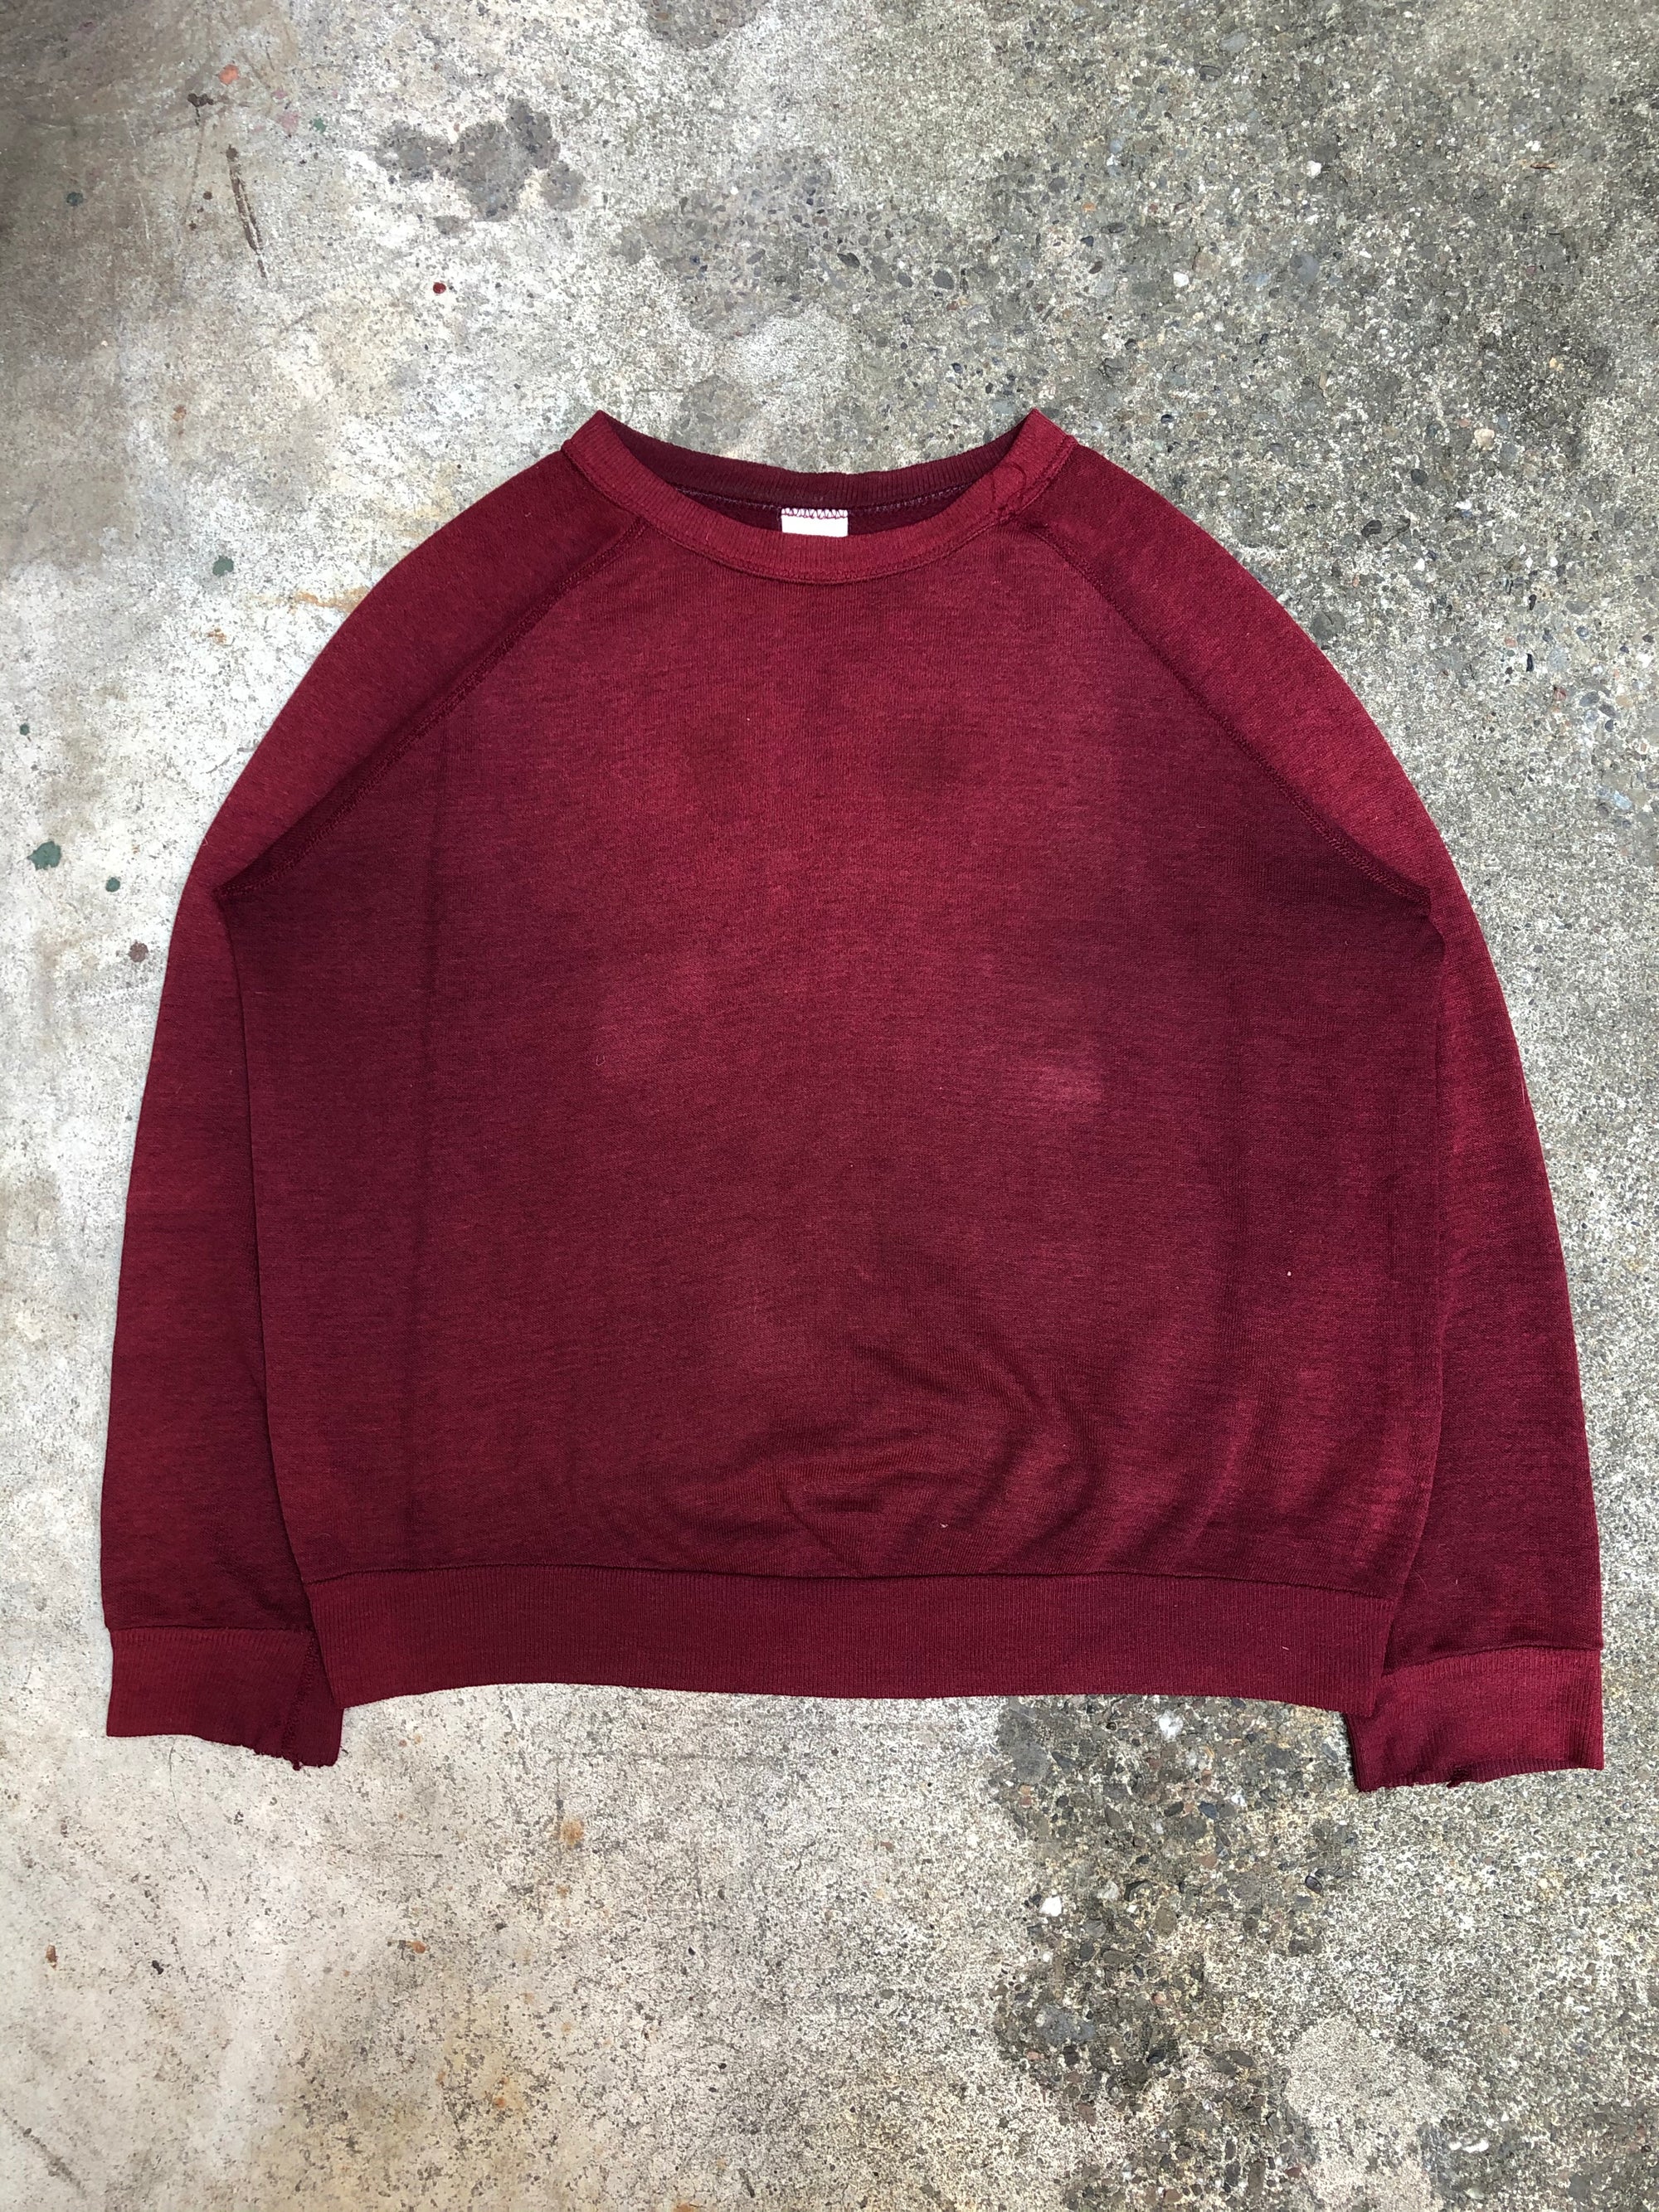 1980s Sun Faded Red Blank Raglan Sweatshirt